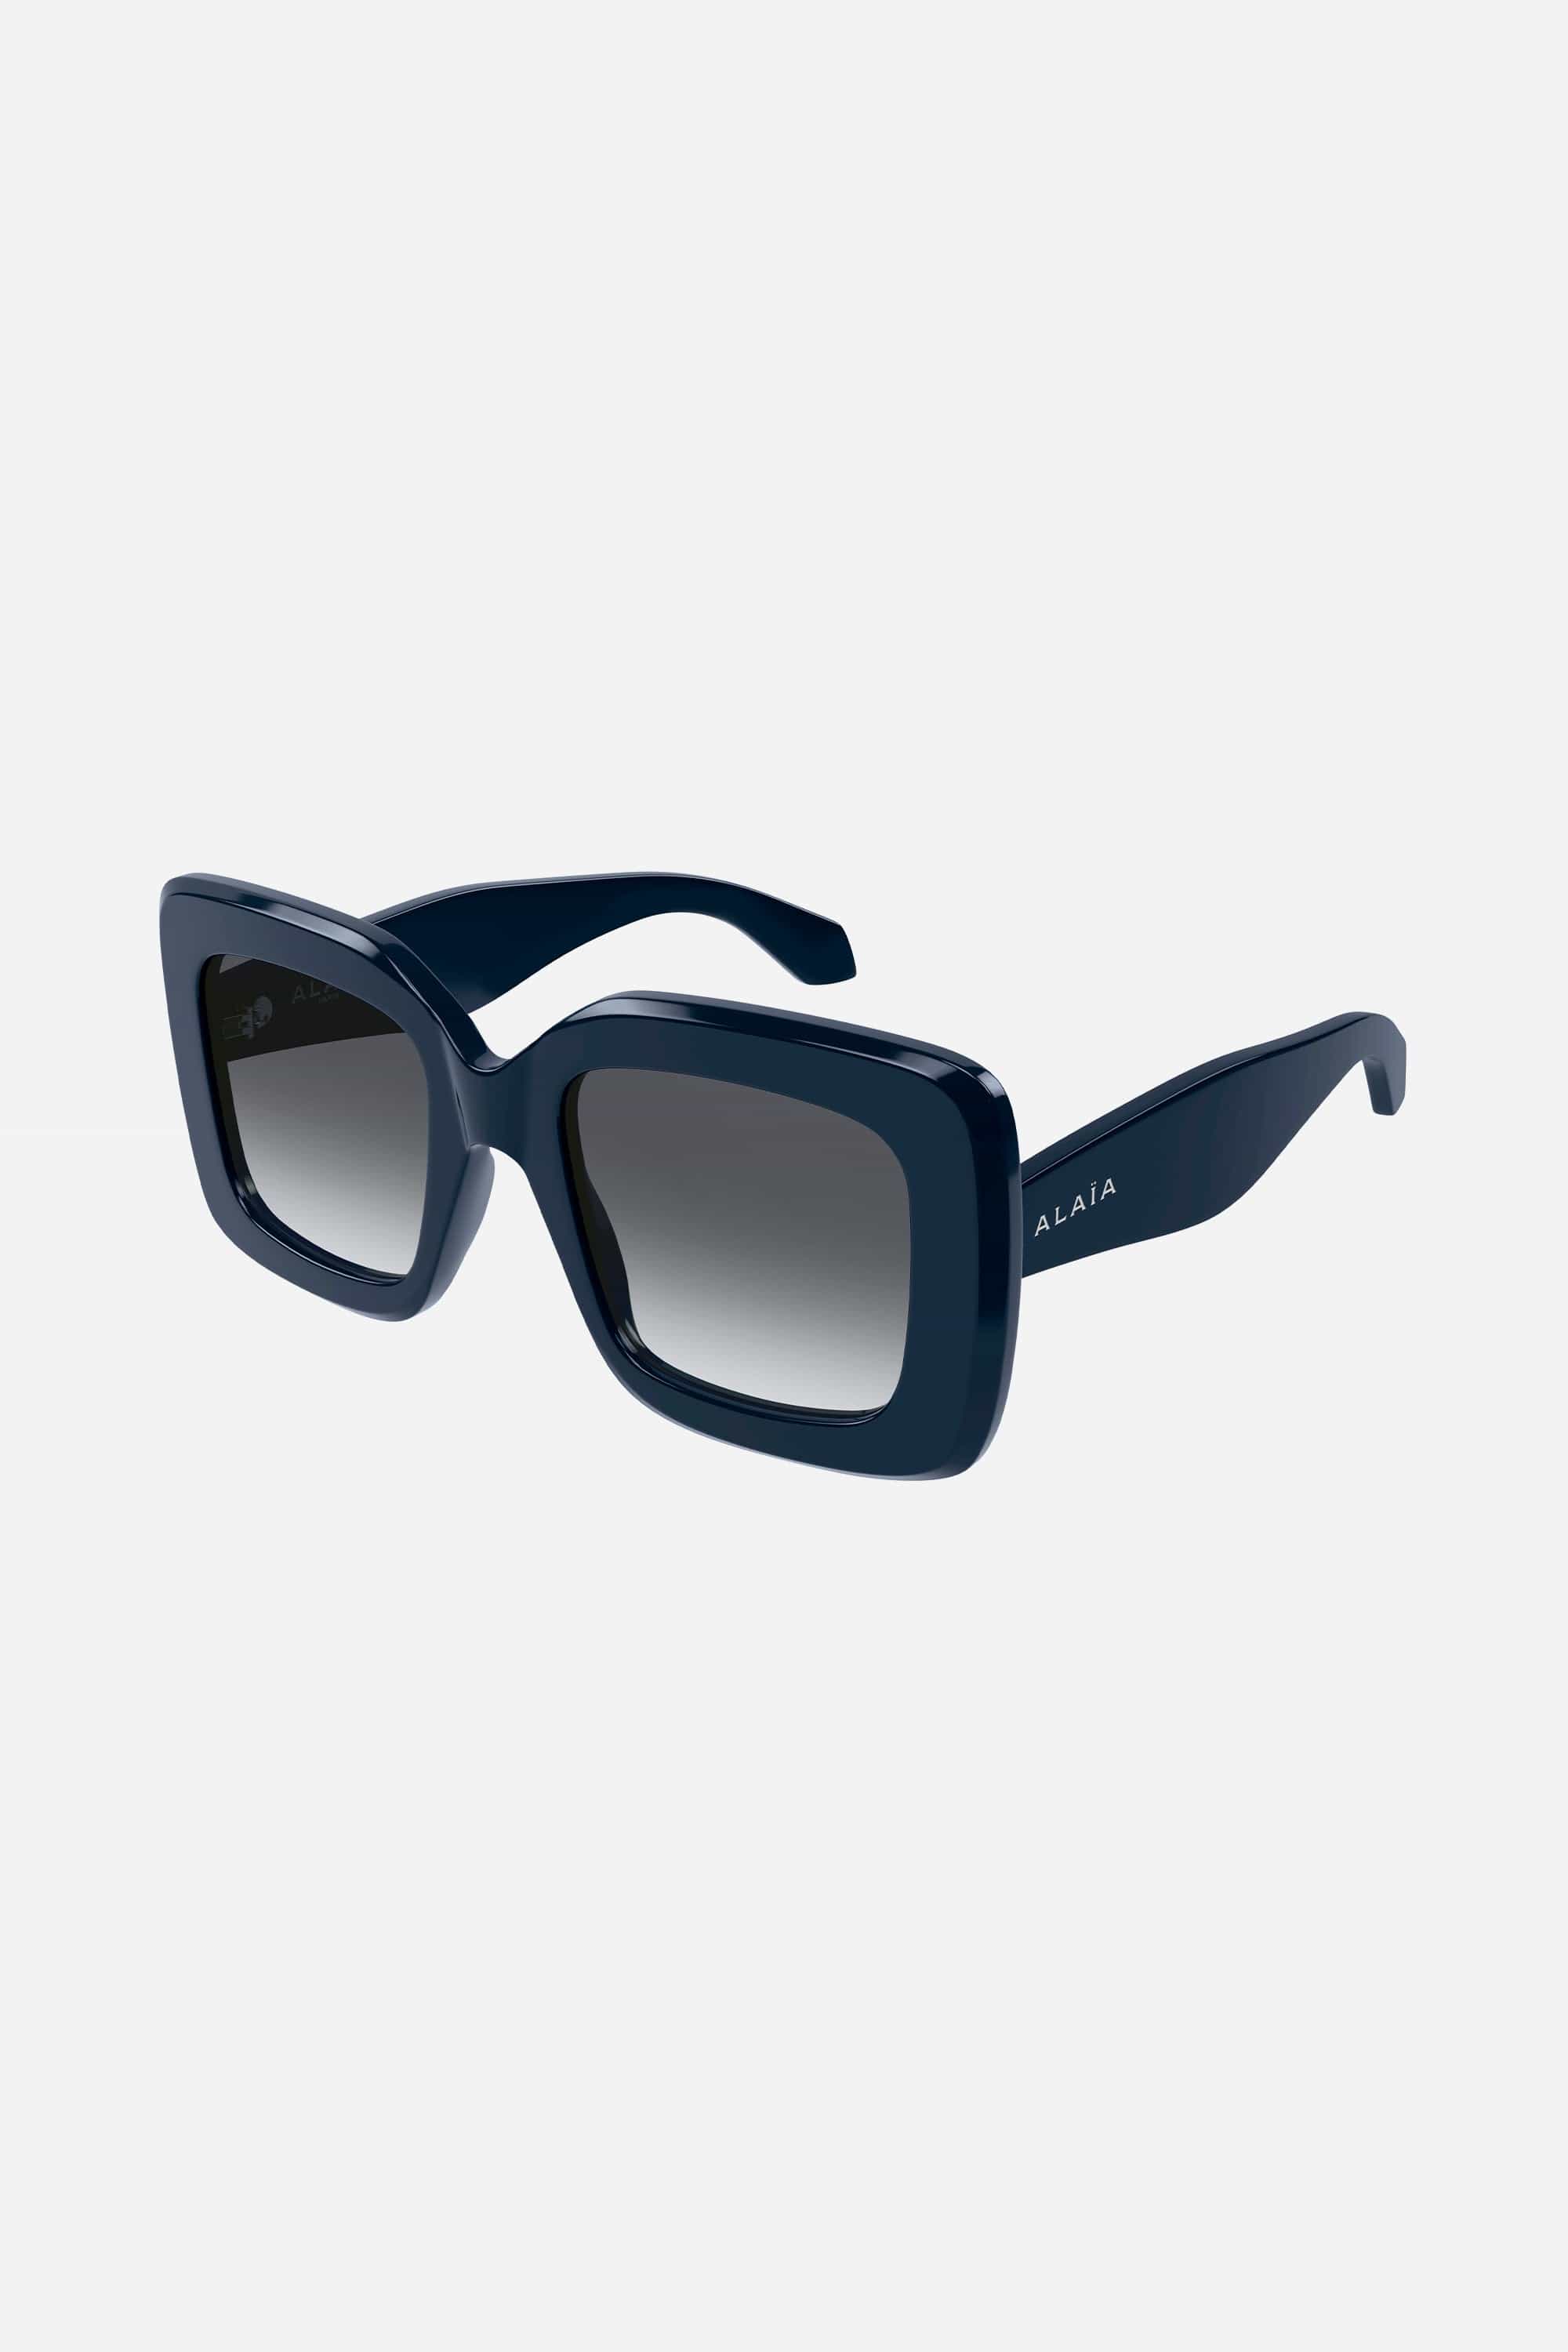 Alaia Blue Squared Sunglasses - Eyewear Club